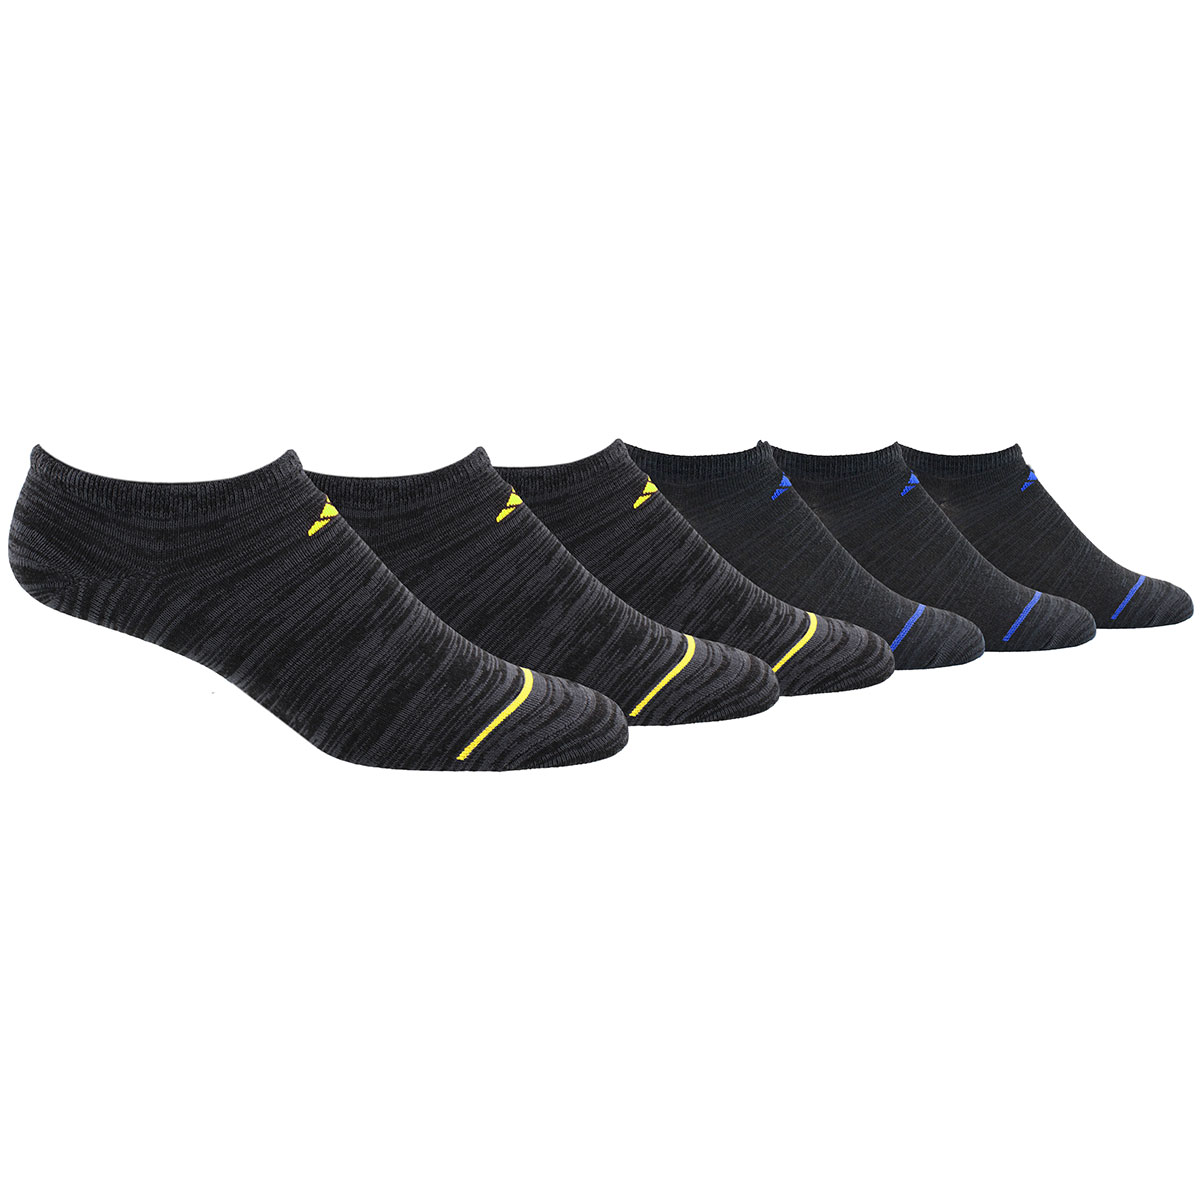 Adidas Boys' Superlight No Show Socks, 6-Pack - Black, L